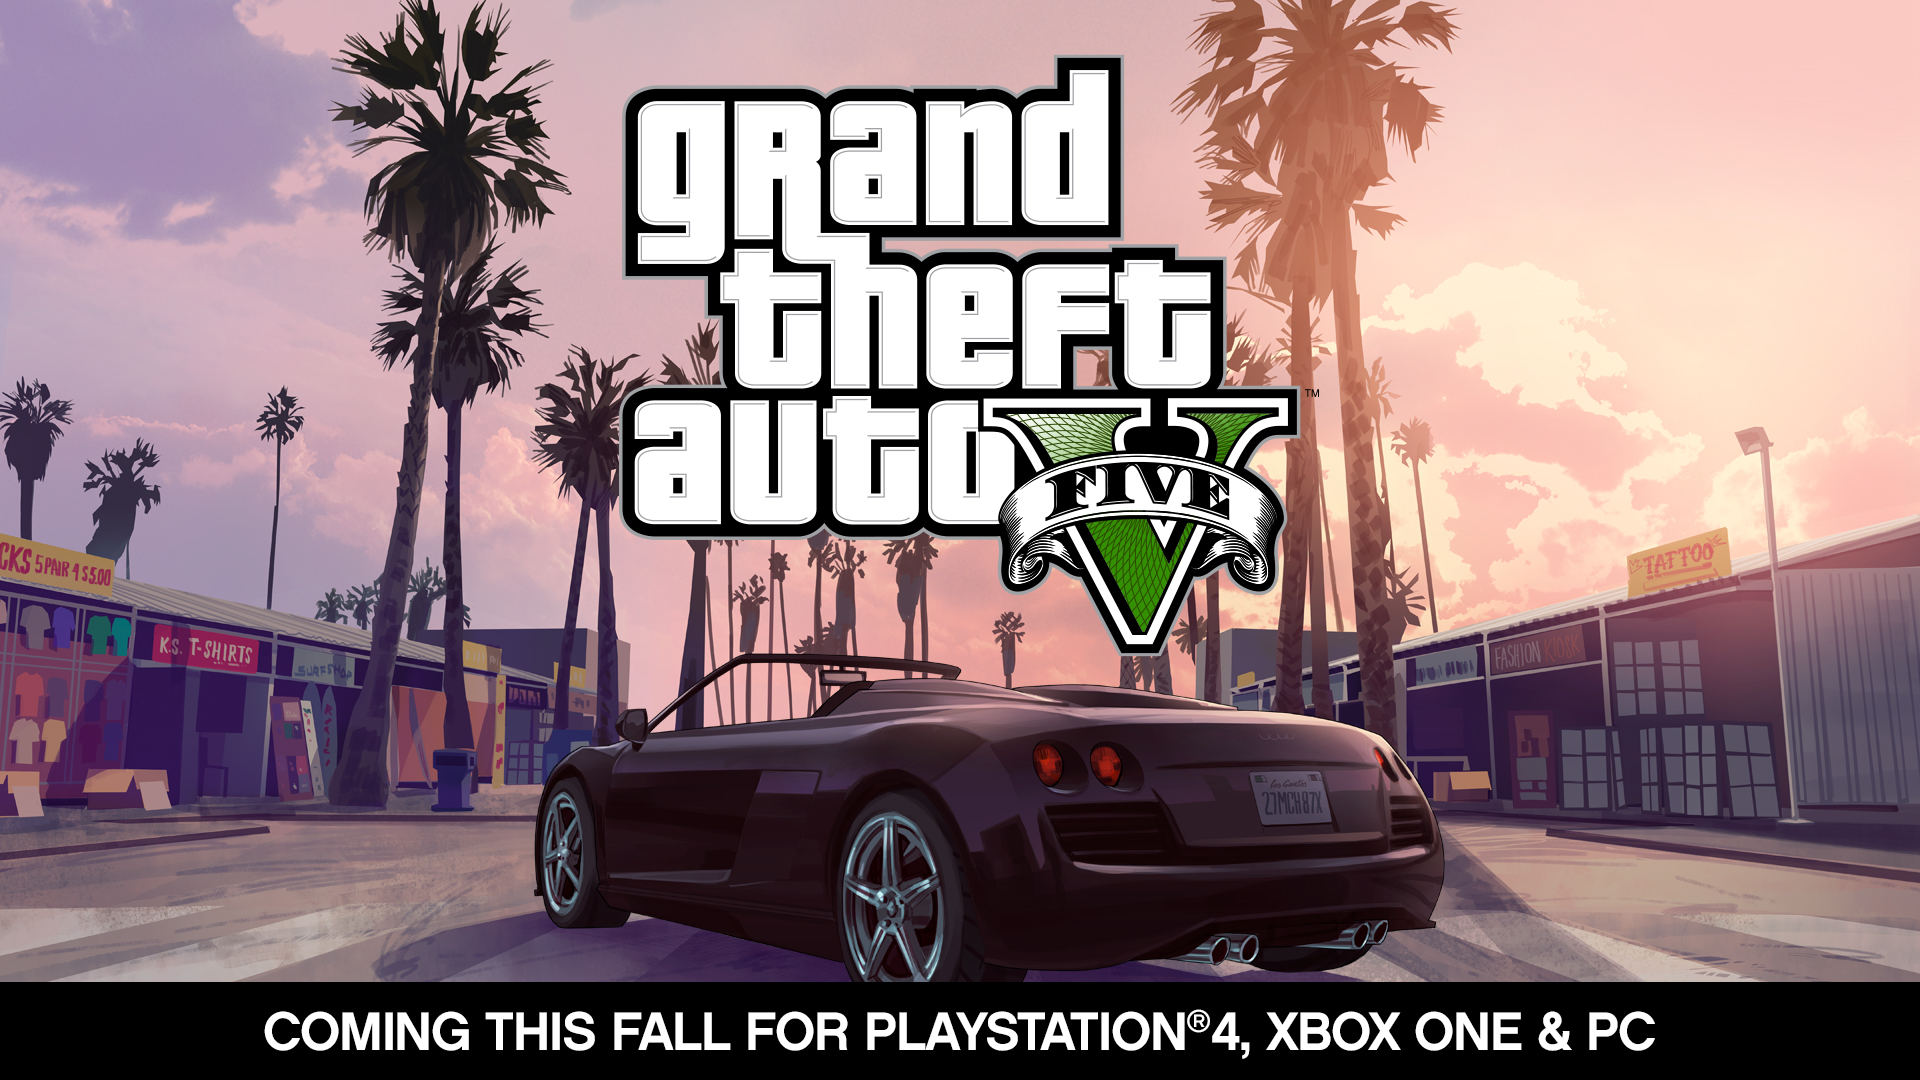 Скачать обои бесплатно Видеоигры, Grand Theft Auto, Grand Theft Auto V картинка на рабочий стол ПК